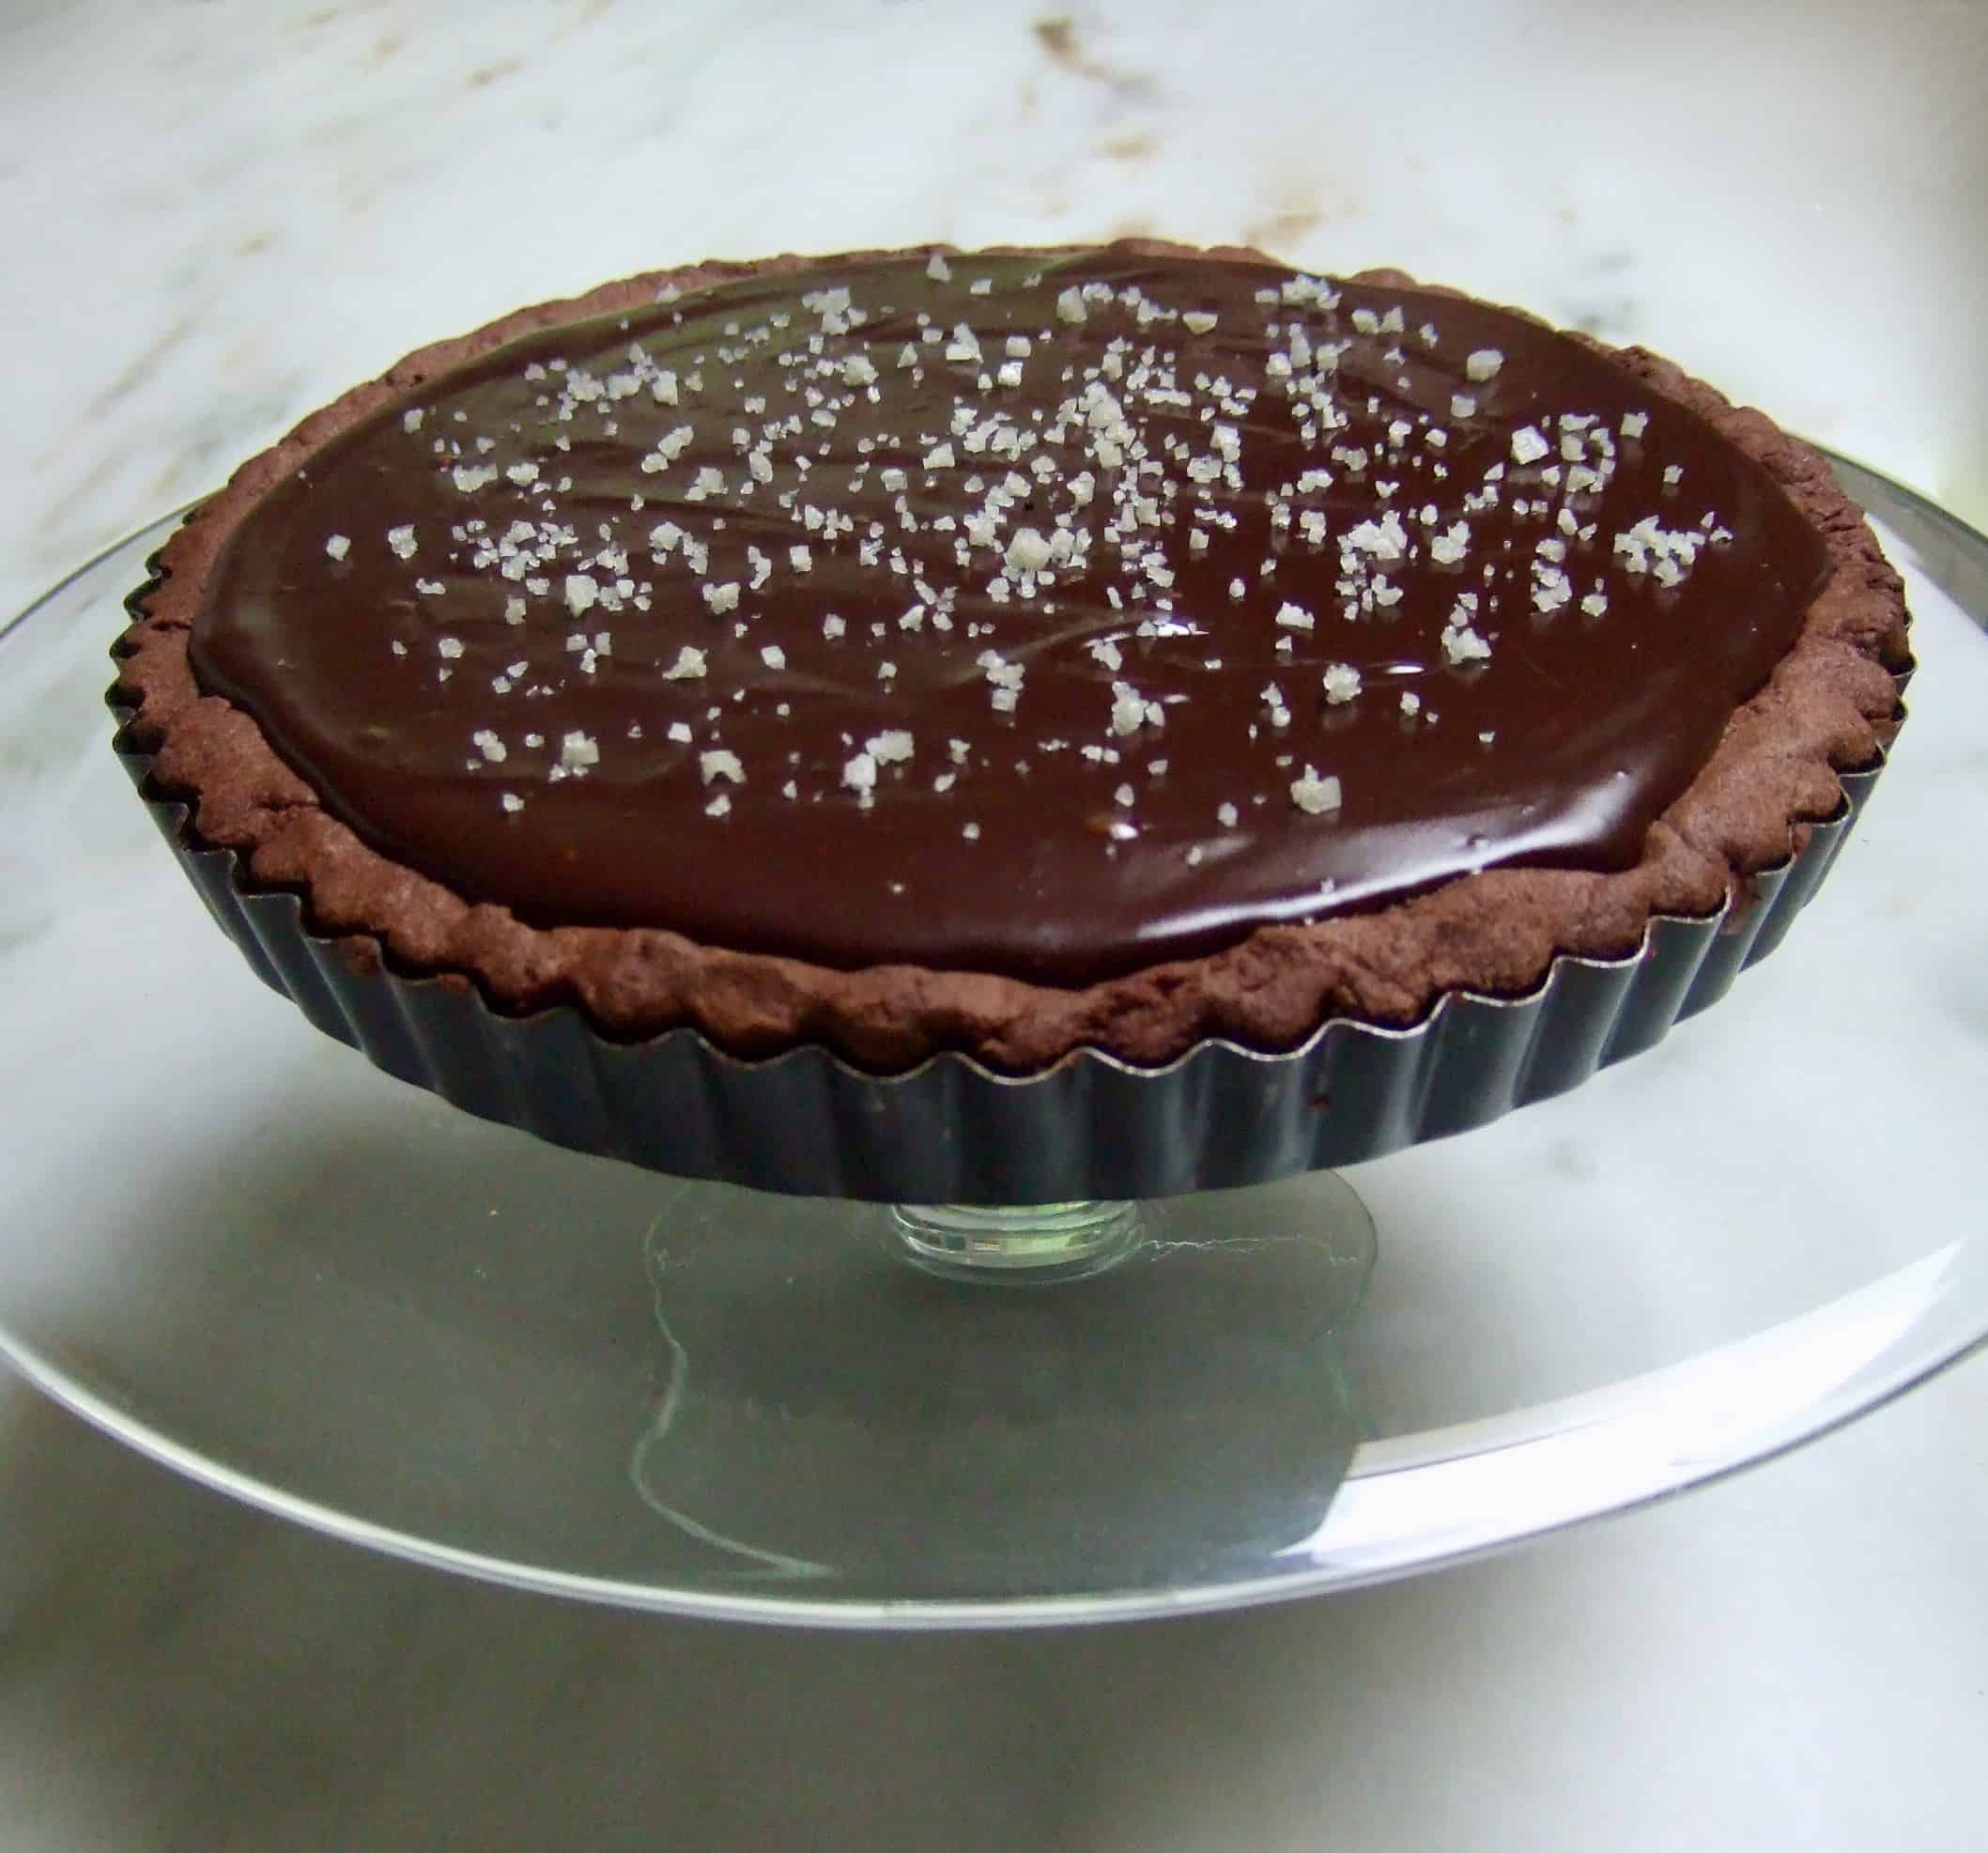 Father’s Day Bake: Chocolate Caramel Tart